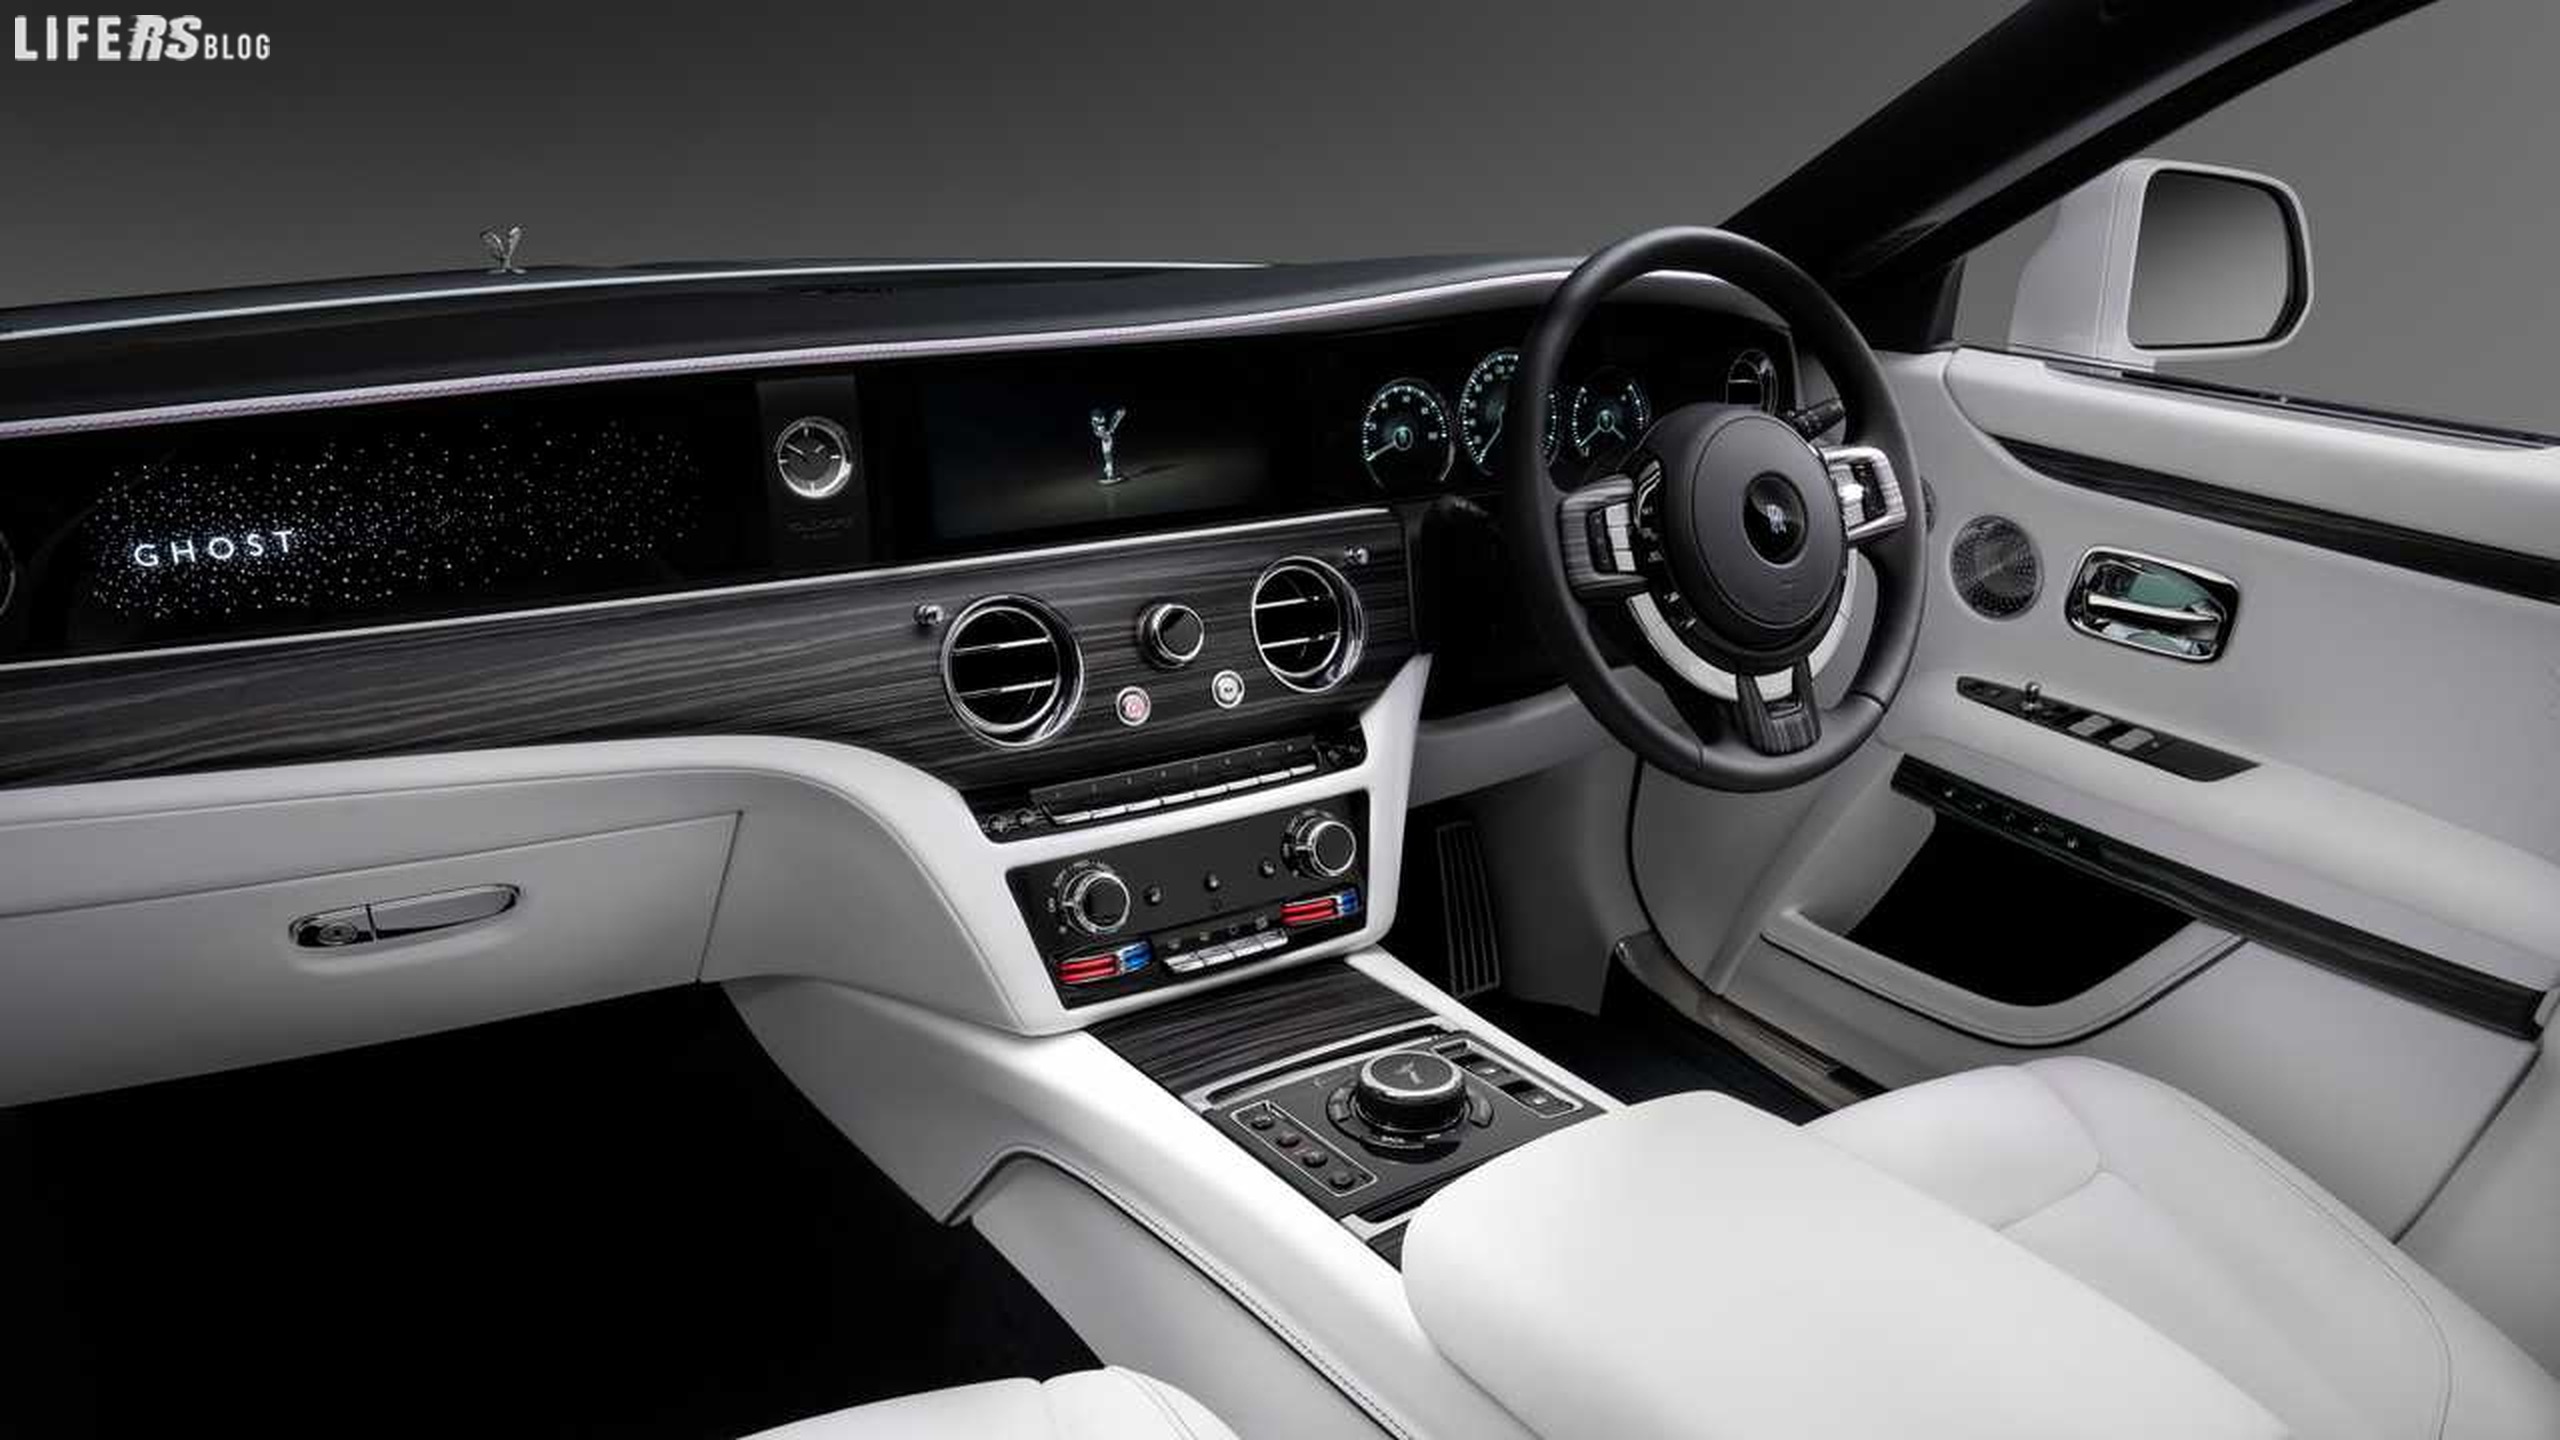 Ghost: Rolls Royce minimalista, ma estremamente complessa!